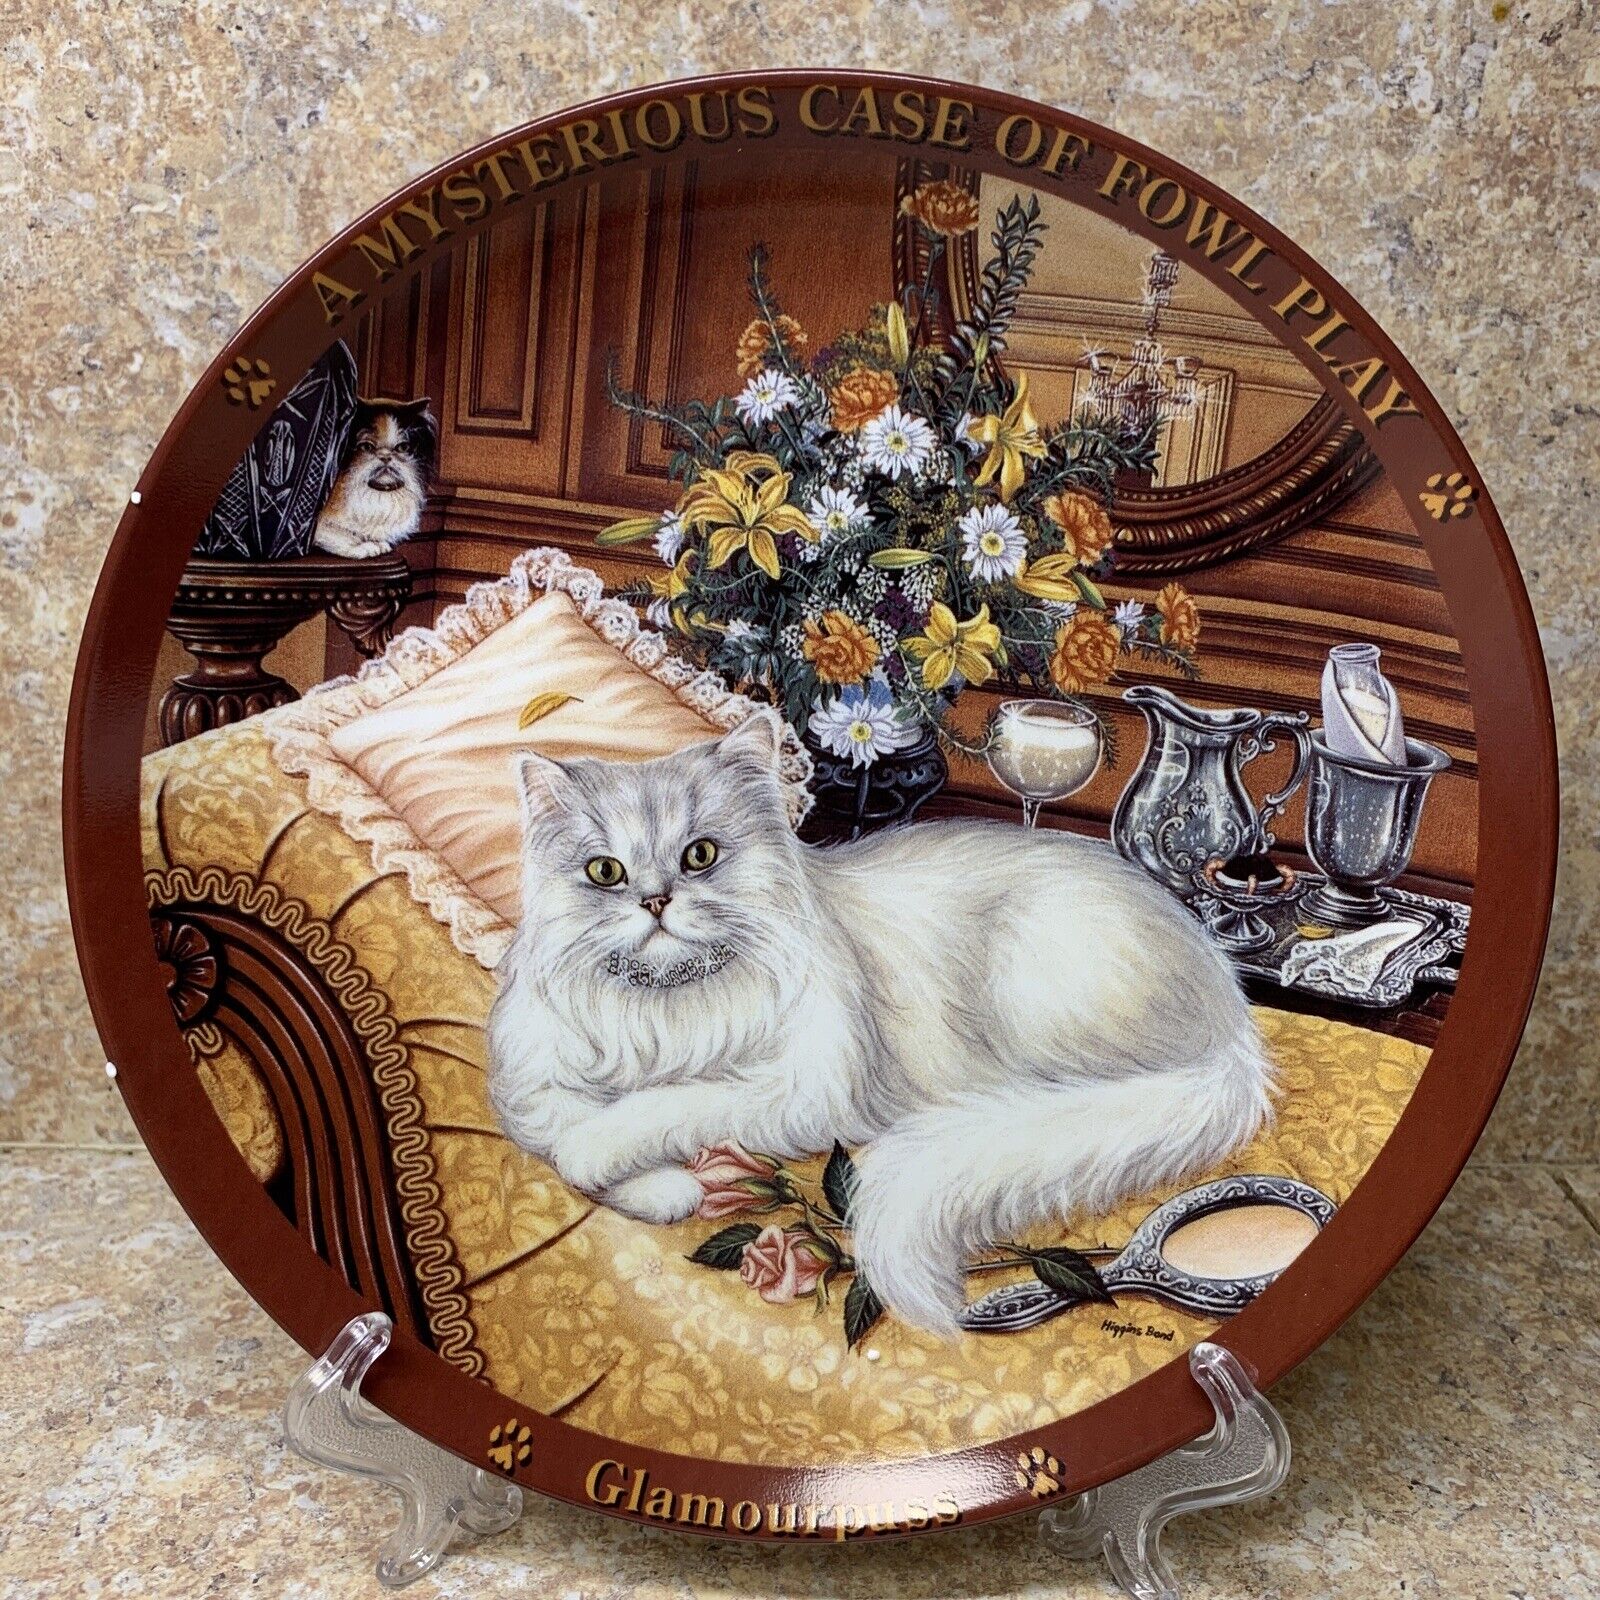 BRADFORD EXCHANGE Plate #1286A “Glamourpuss” 2nd Plate In Series Higgins Bond